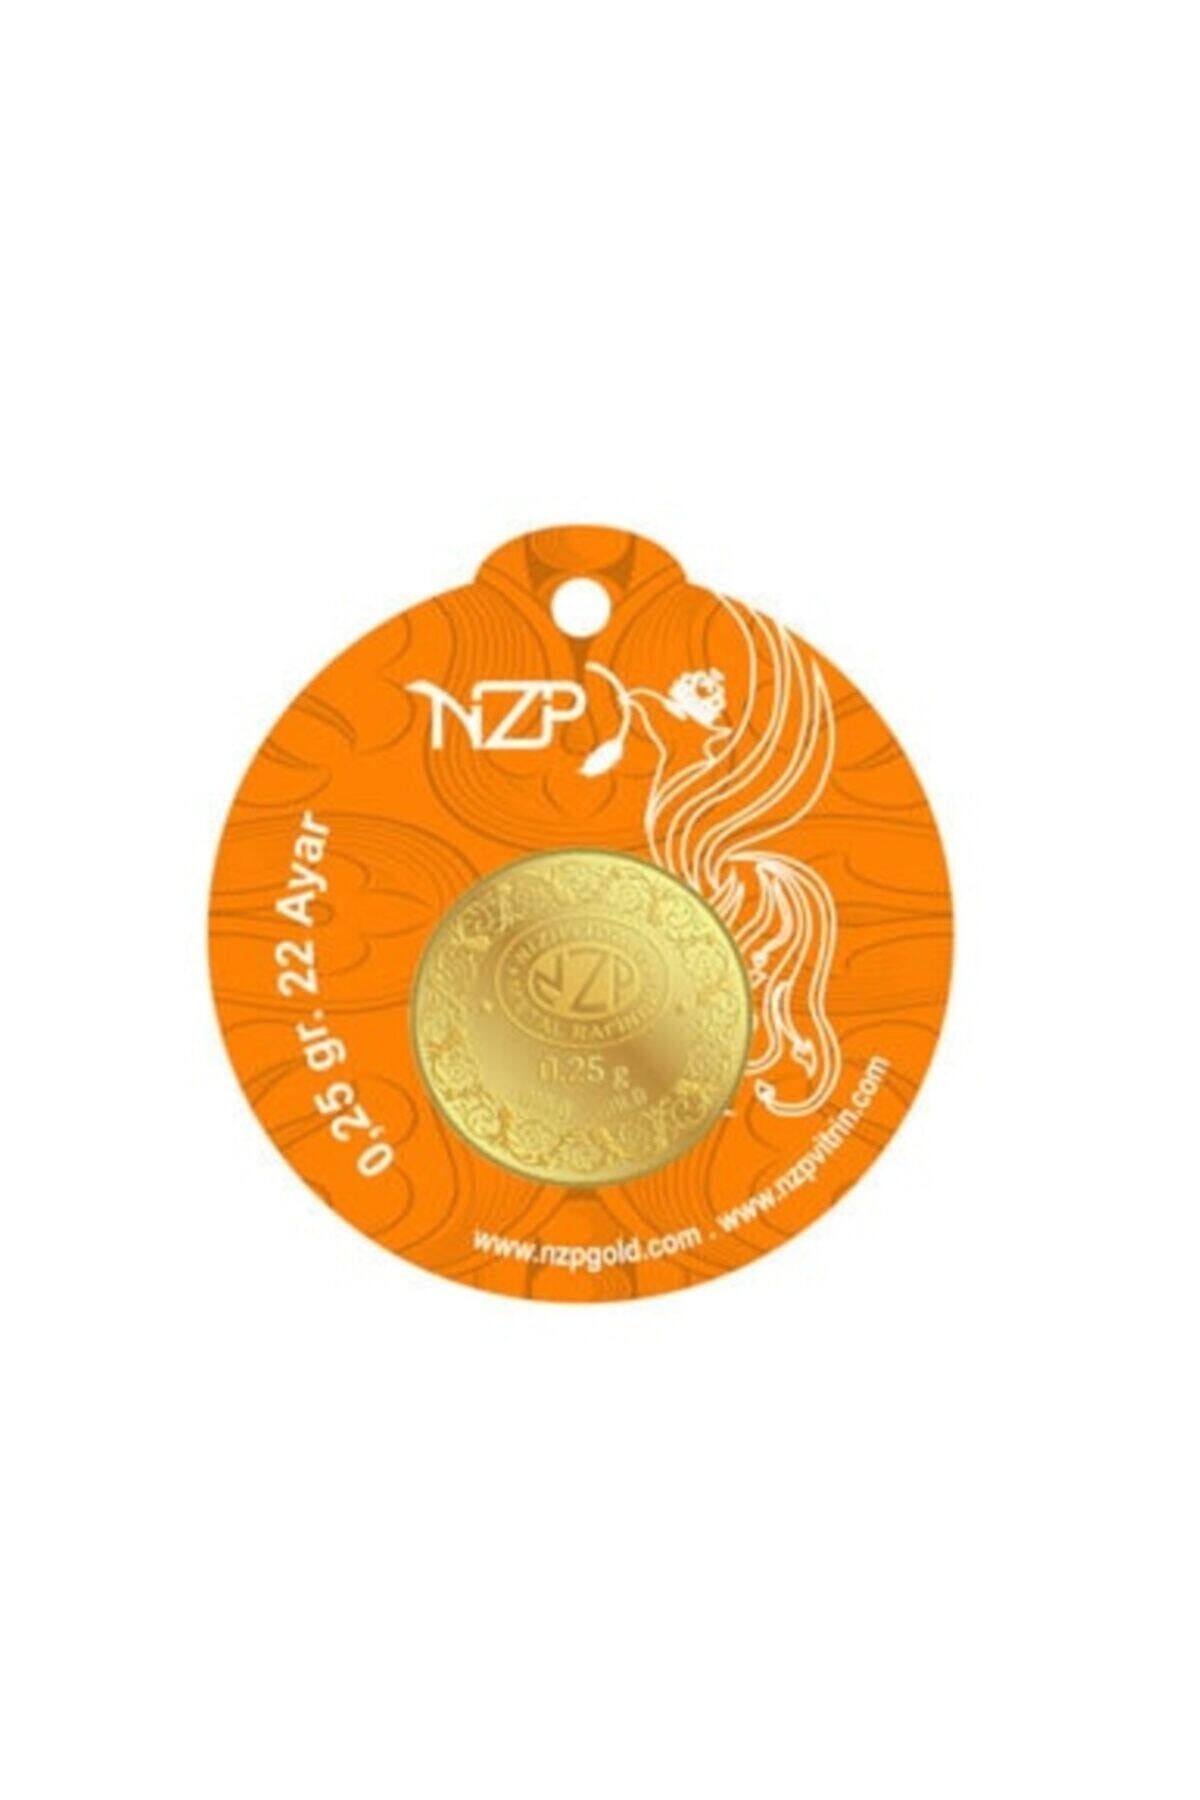 NZP Gold 0,25 Gr 22 Ayar Altın